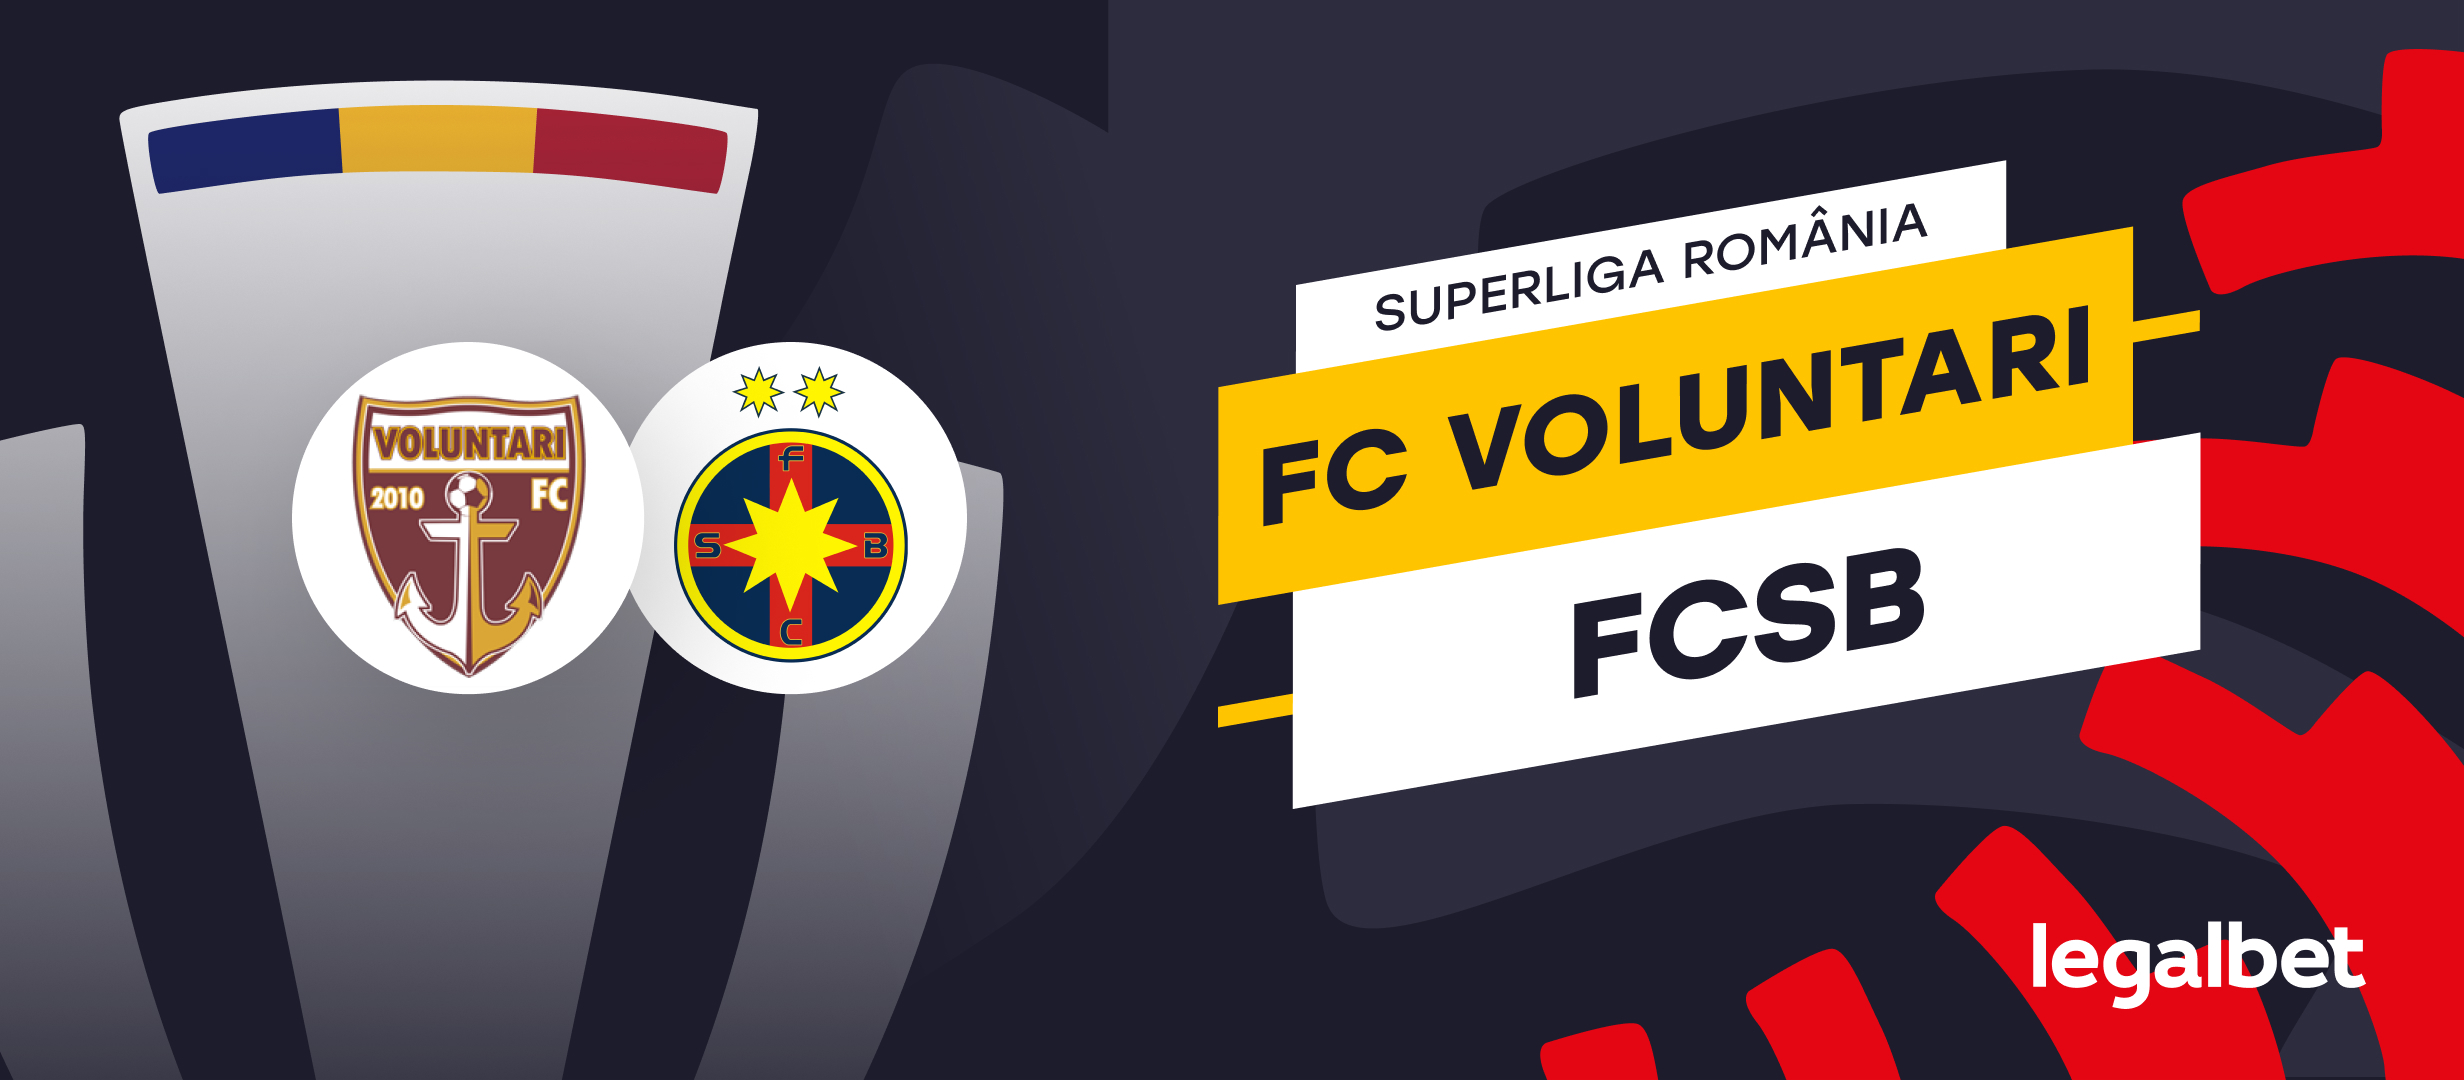 FC Voluntari - FCSB: Ponturi si cote la pariuri